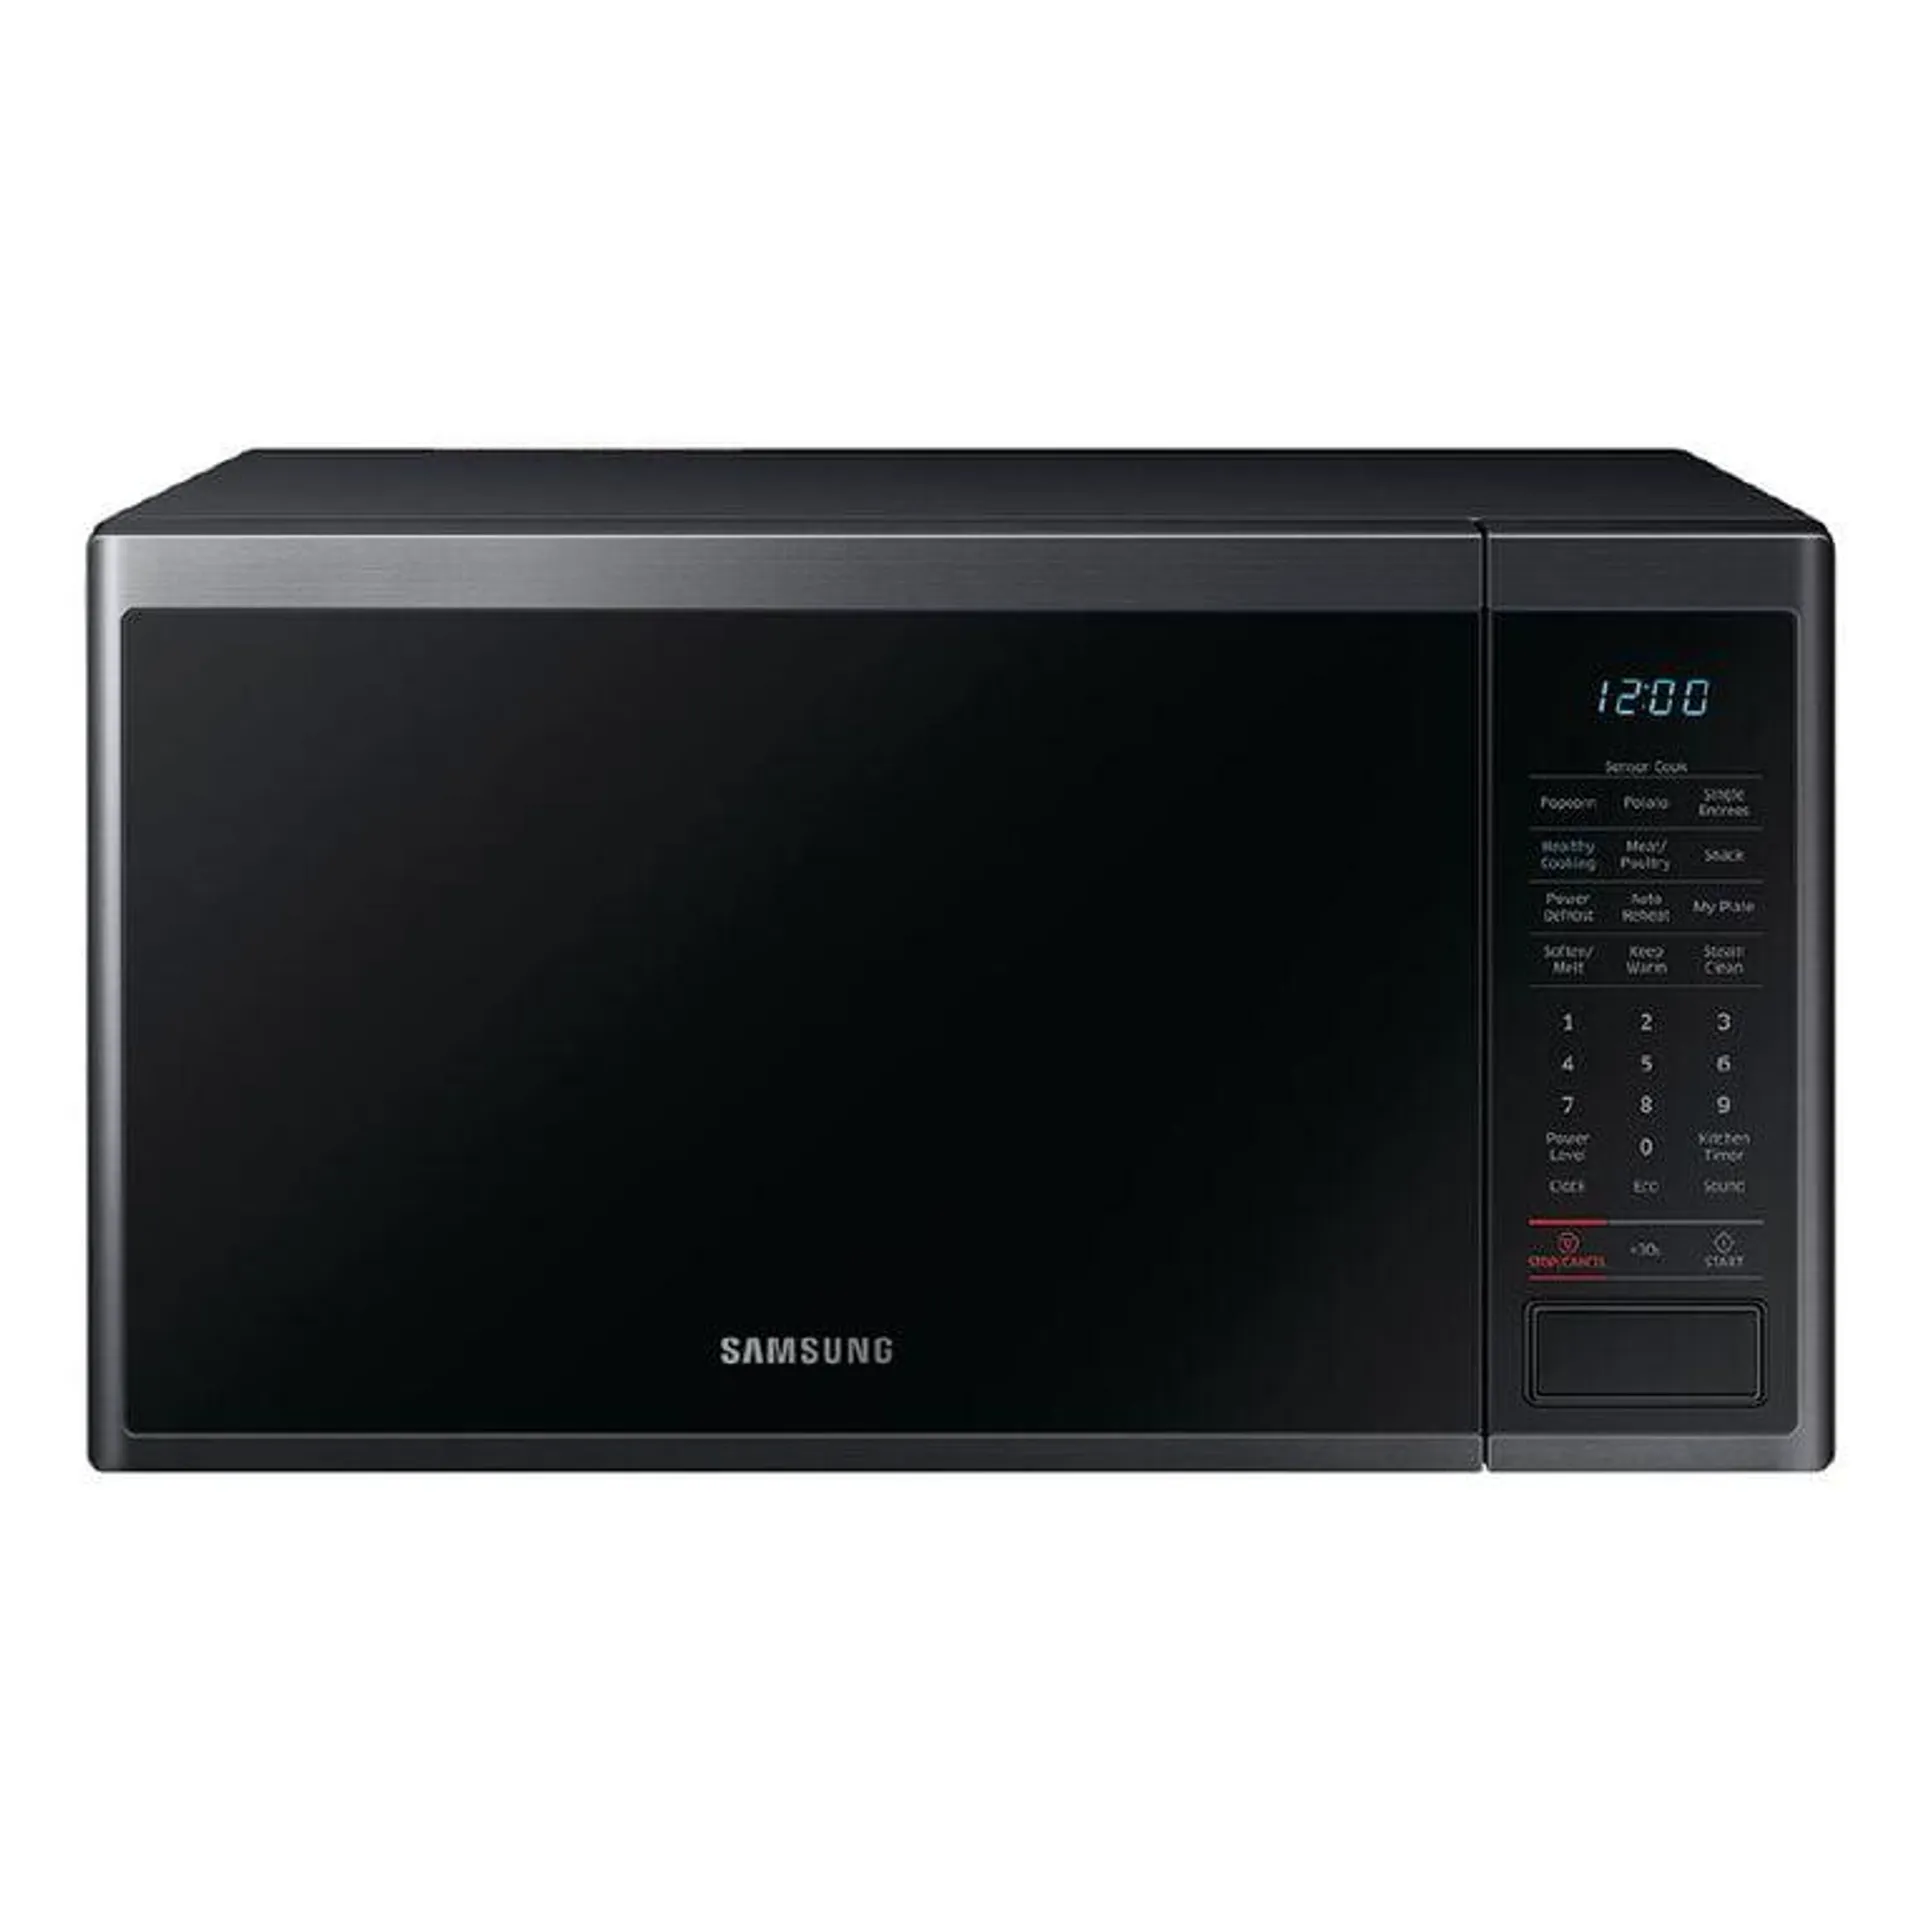 Samsung 32L Sensor Microwave - Black Stainless